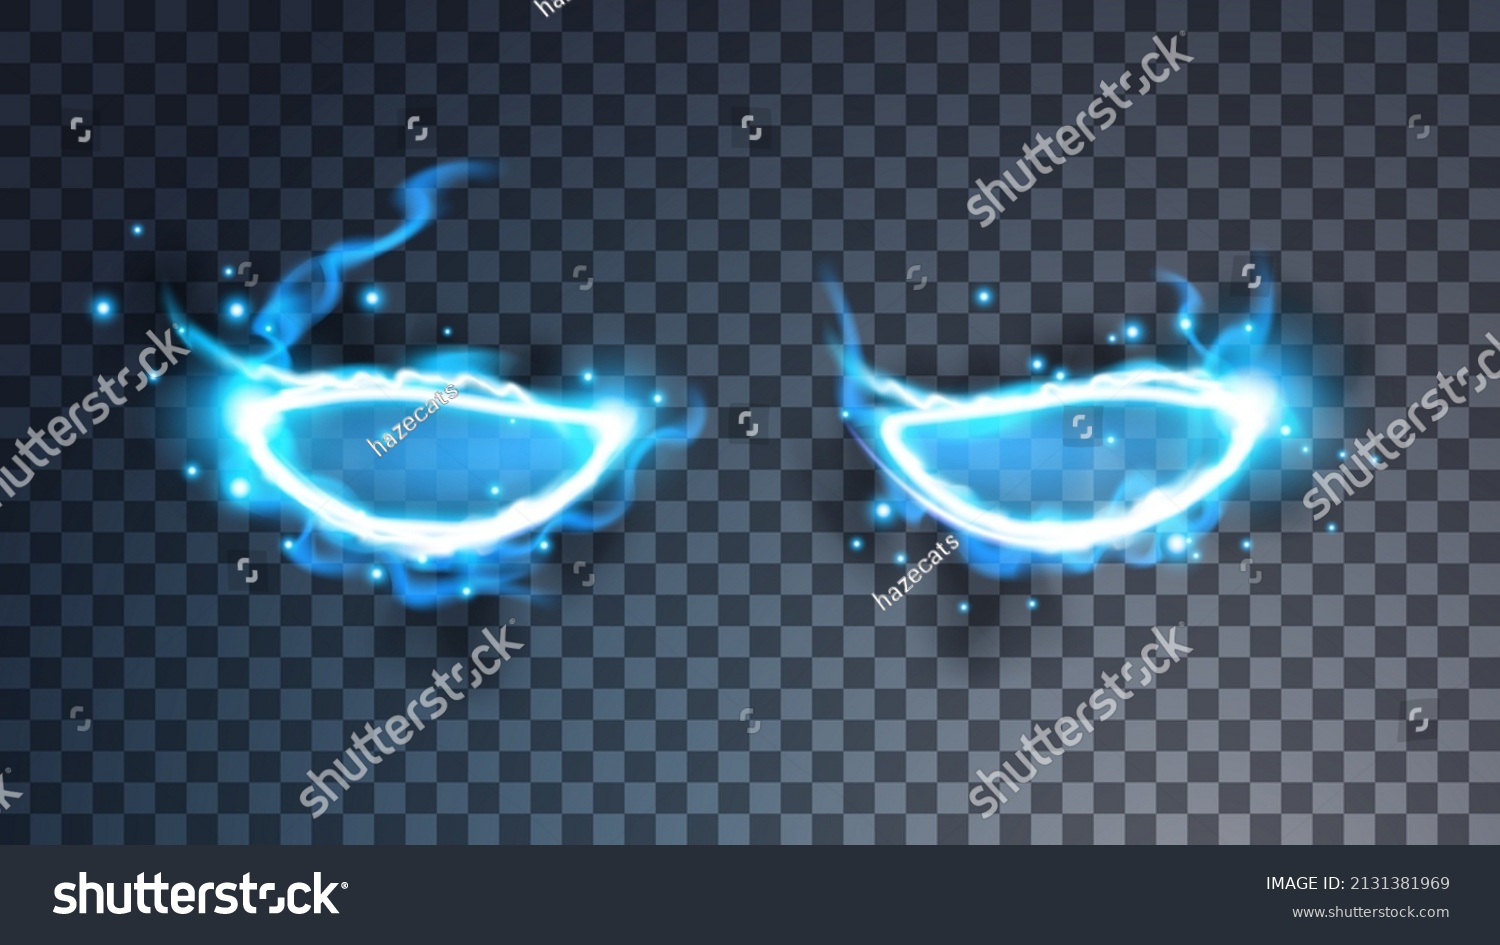 SVG of Modern magic eyes symbol or mask. Ethereal lightning substance sign and strange flame spark. Decor elements for magic doctor, shaman, medium. Luminous trail effect on transparent background. svg